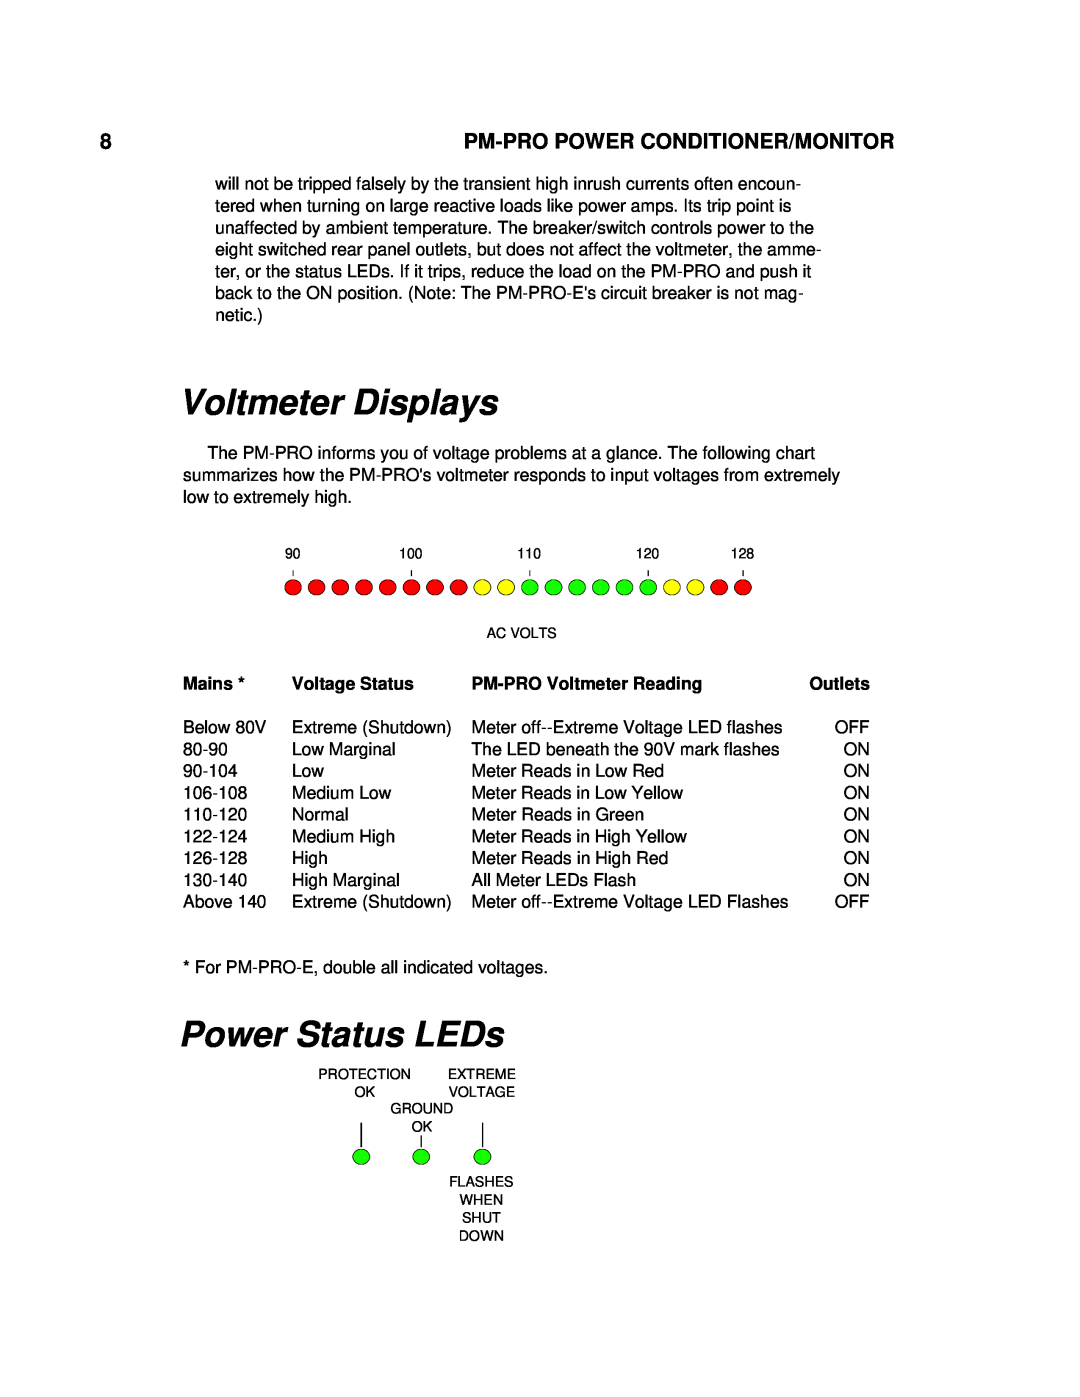 Furman Sound PM-PRO-E Voltmeter Displays, Power Status LEDs, Mains, Voltage Status, PM-PRO Voltmeter Reading, Outlets 